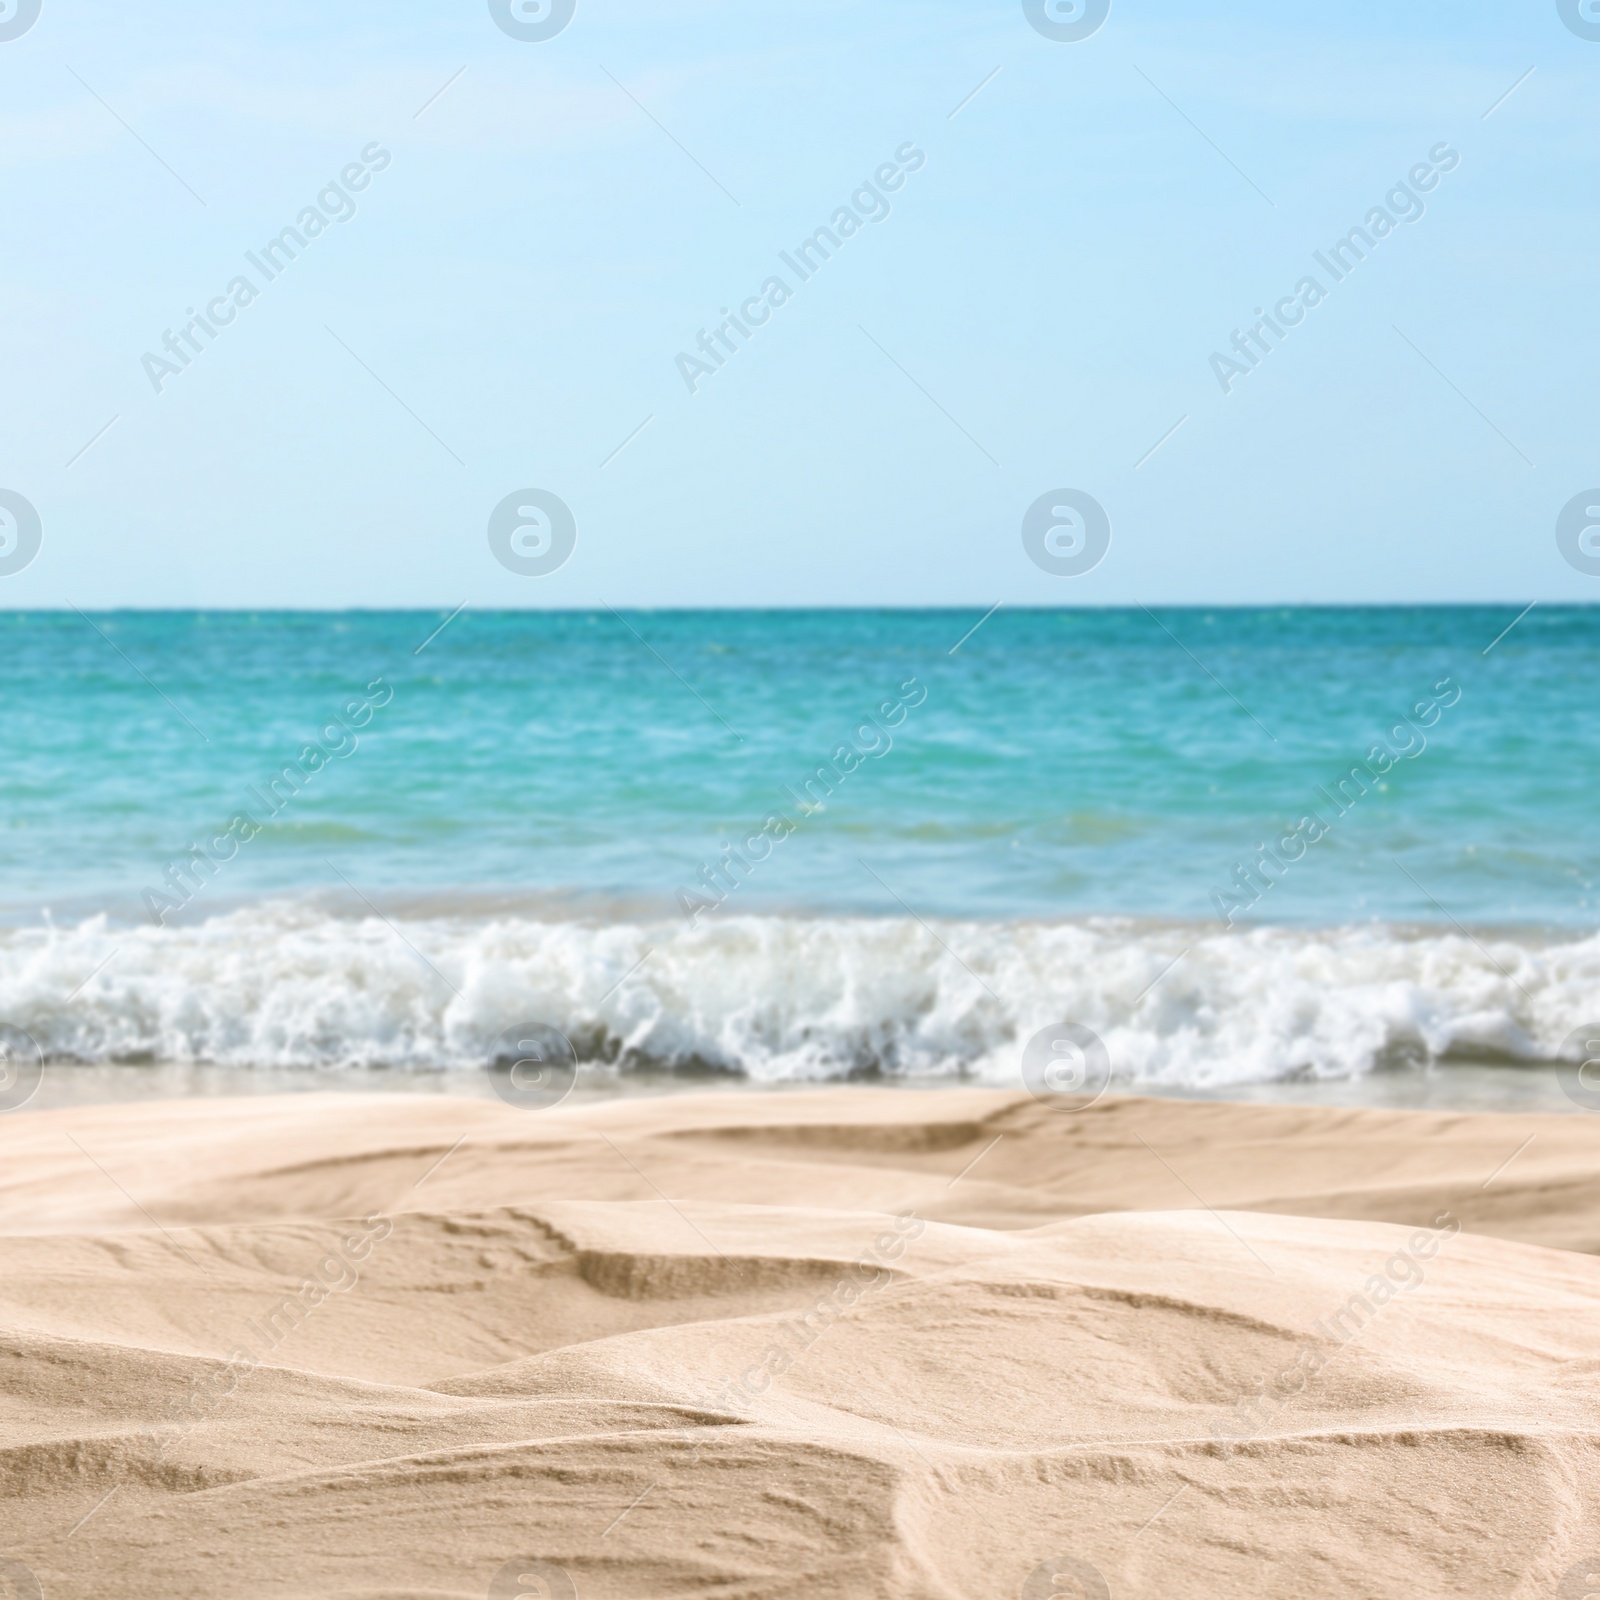 Image of Ocean waves rolling on sandy beach, closeup view